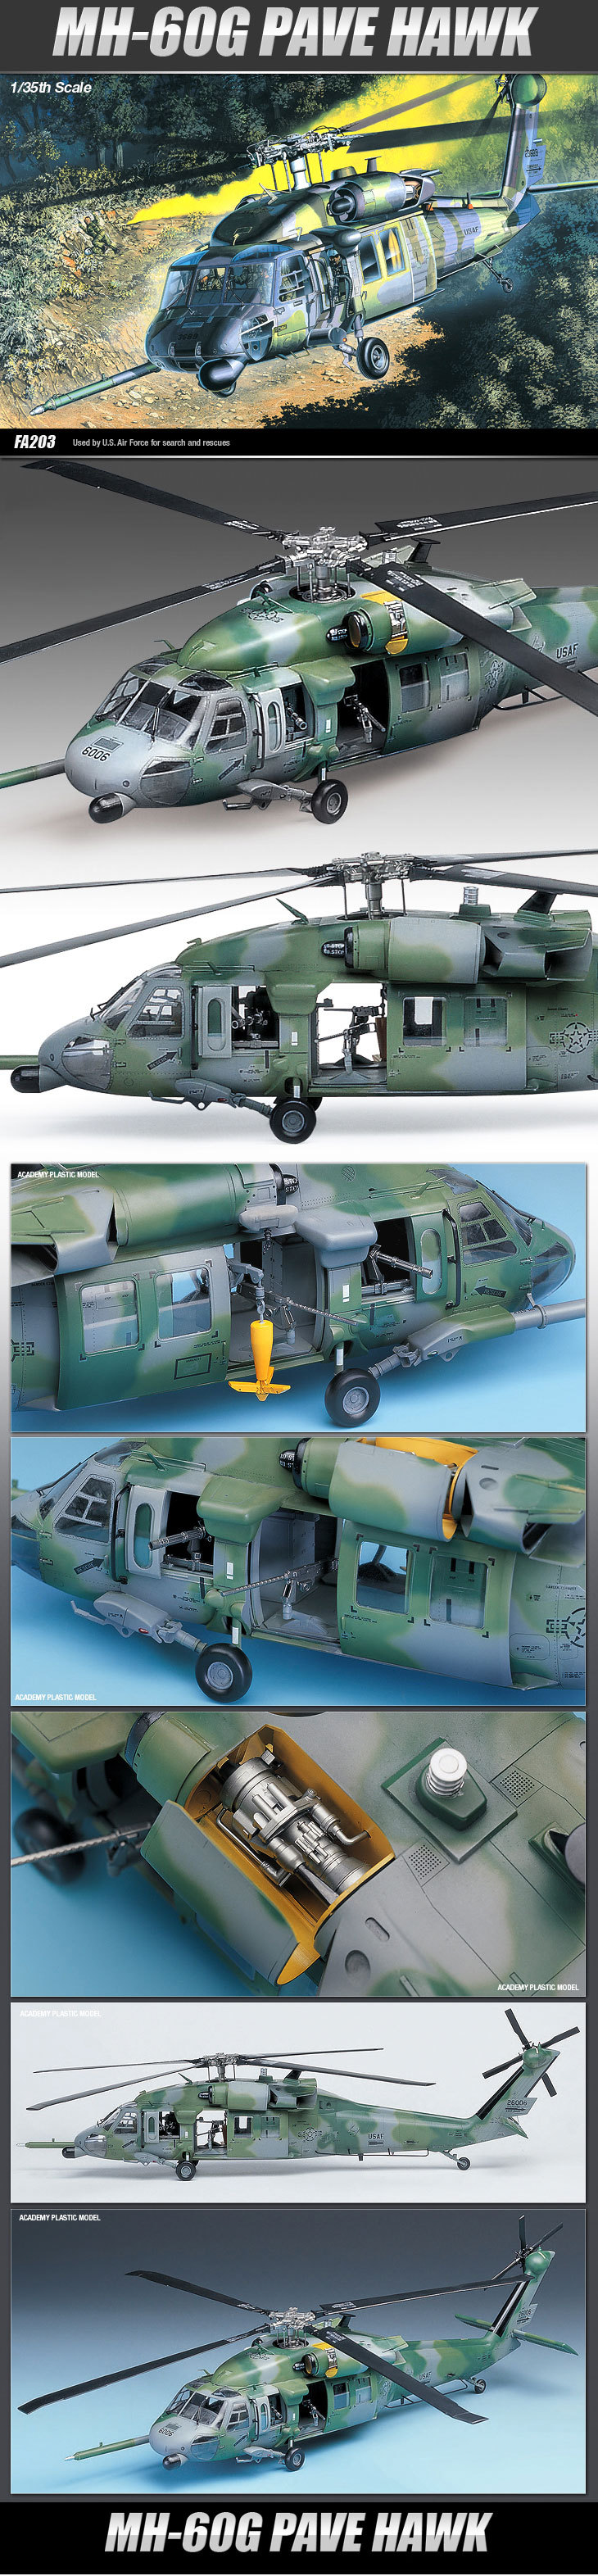 Sikorsky MH-60G Pave Hawk #02201 [1/35th ACADEMY MADE IN KOREA] PT3 - Ⅱ  AERO  Chopper - 미라지의 콤프방